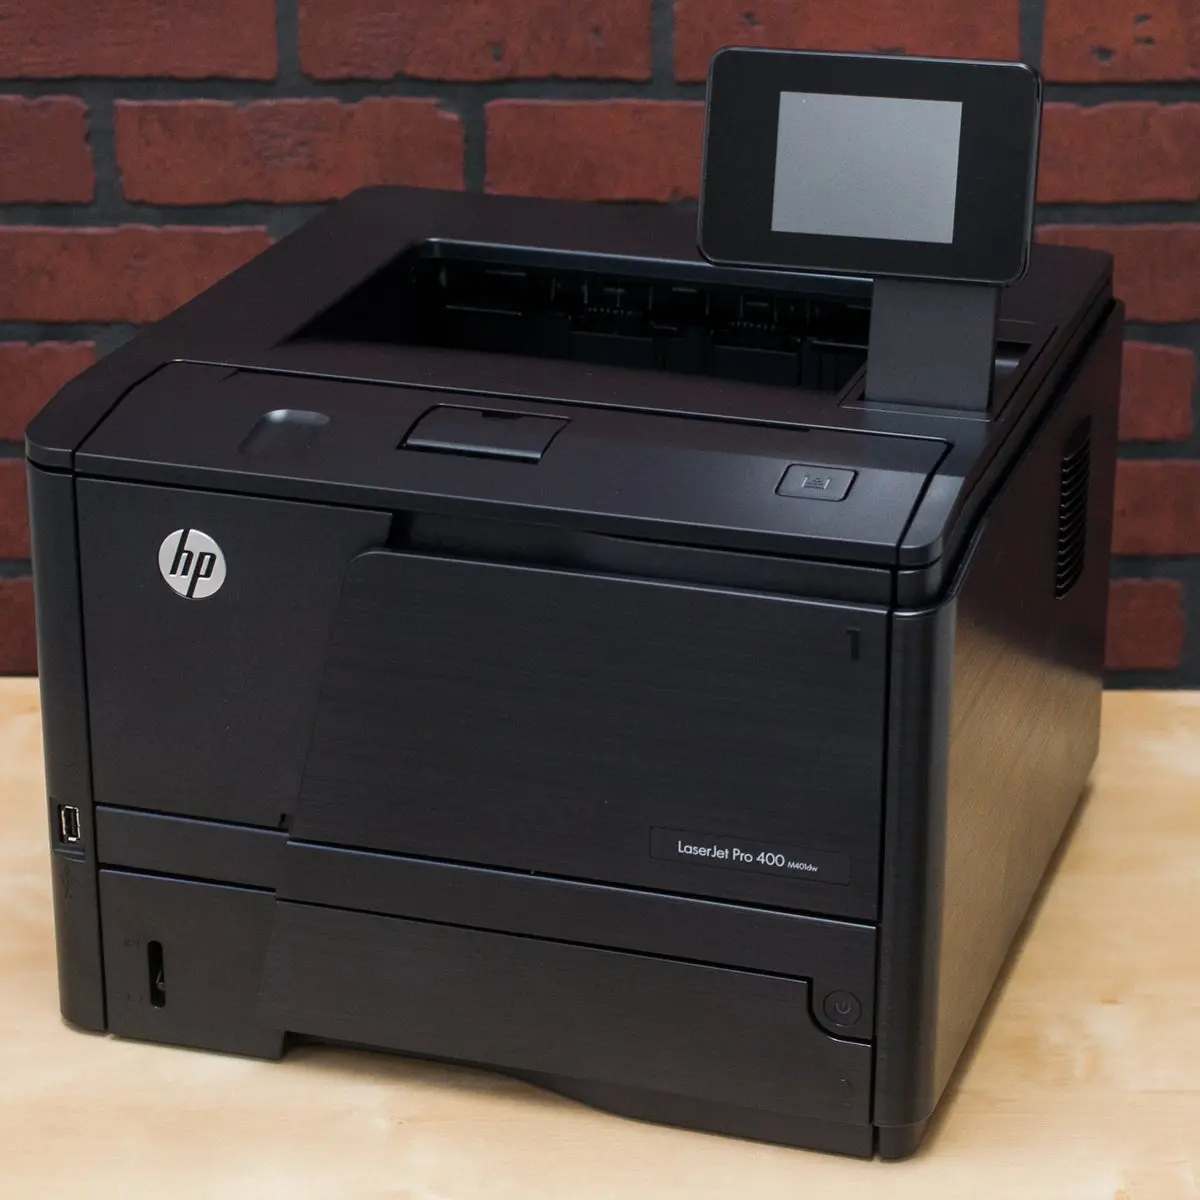 Hp laserjet pro 400 m401dn printer: efficient & reliable for offices